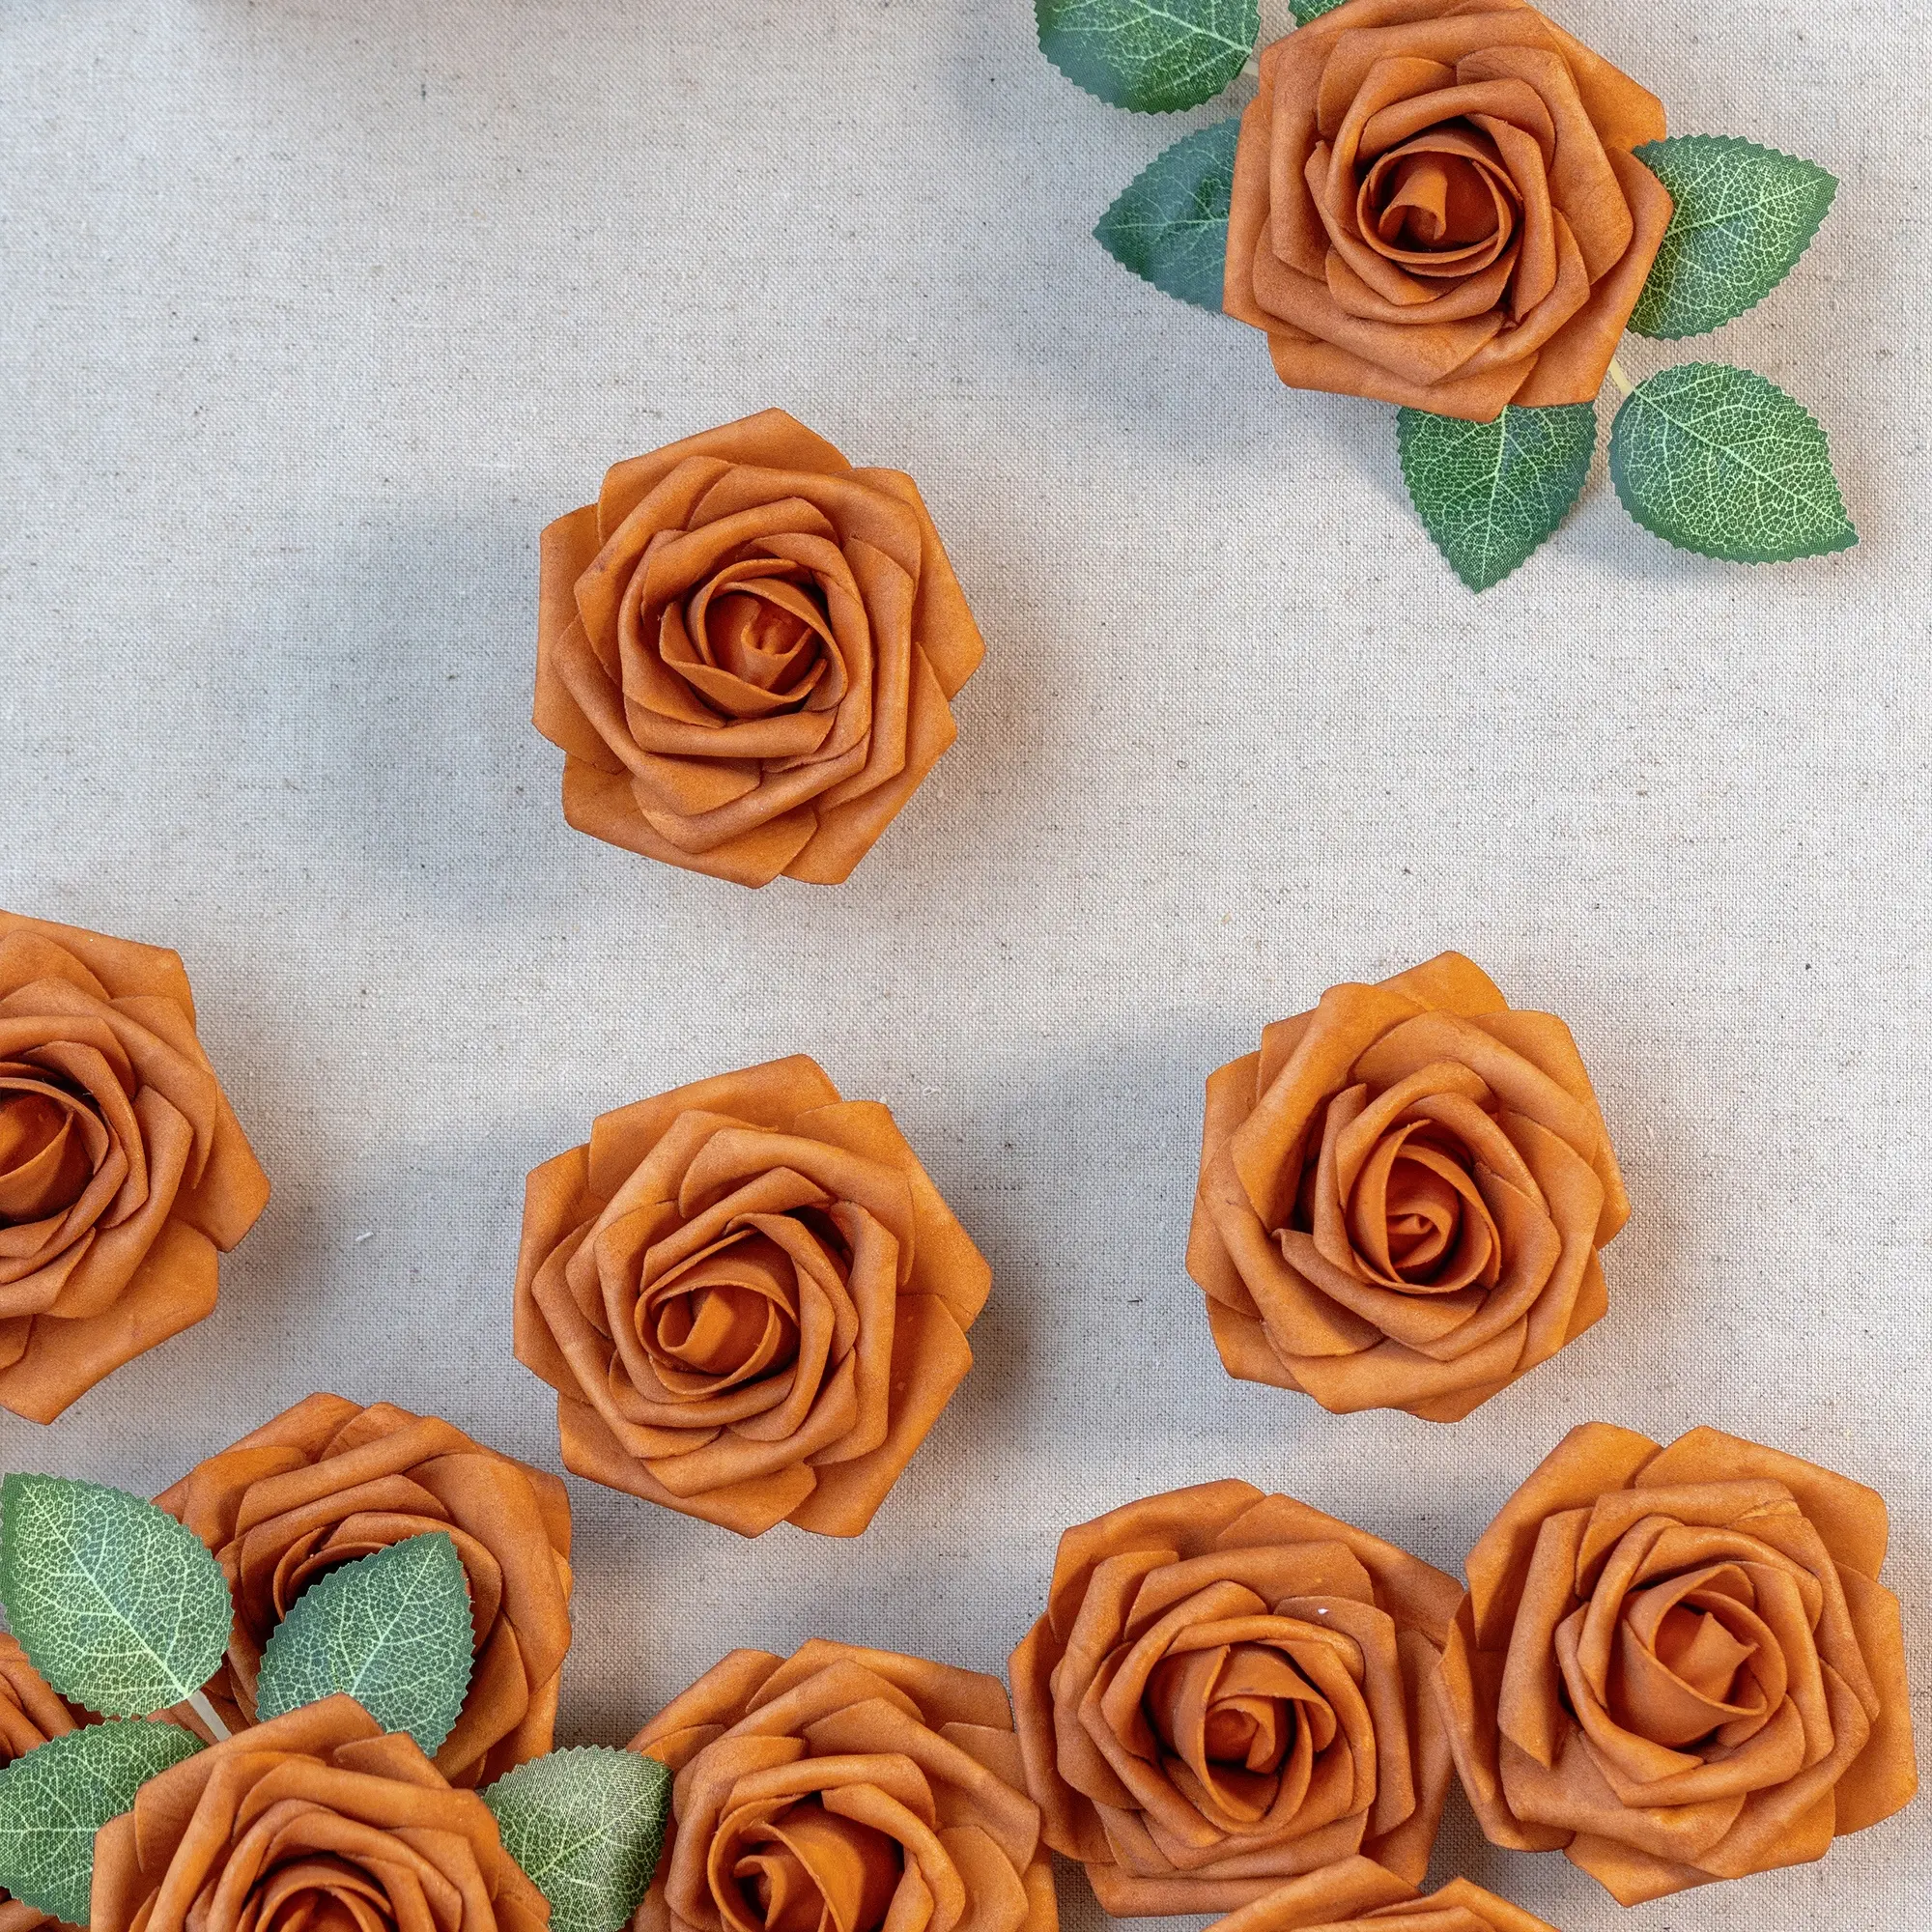 Wholesale Silk Rose Artificial Flowers Bouquet Decorative Flowers For Home Wedding Decor Burnt Orange Rose Artificial Flower